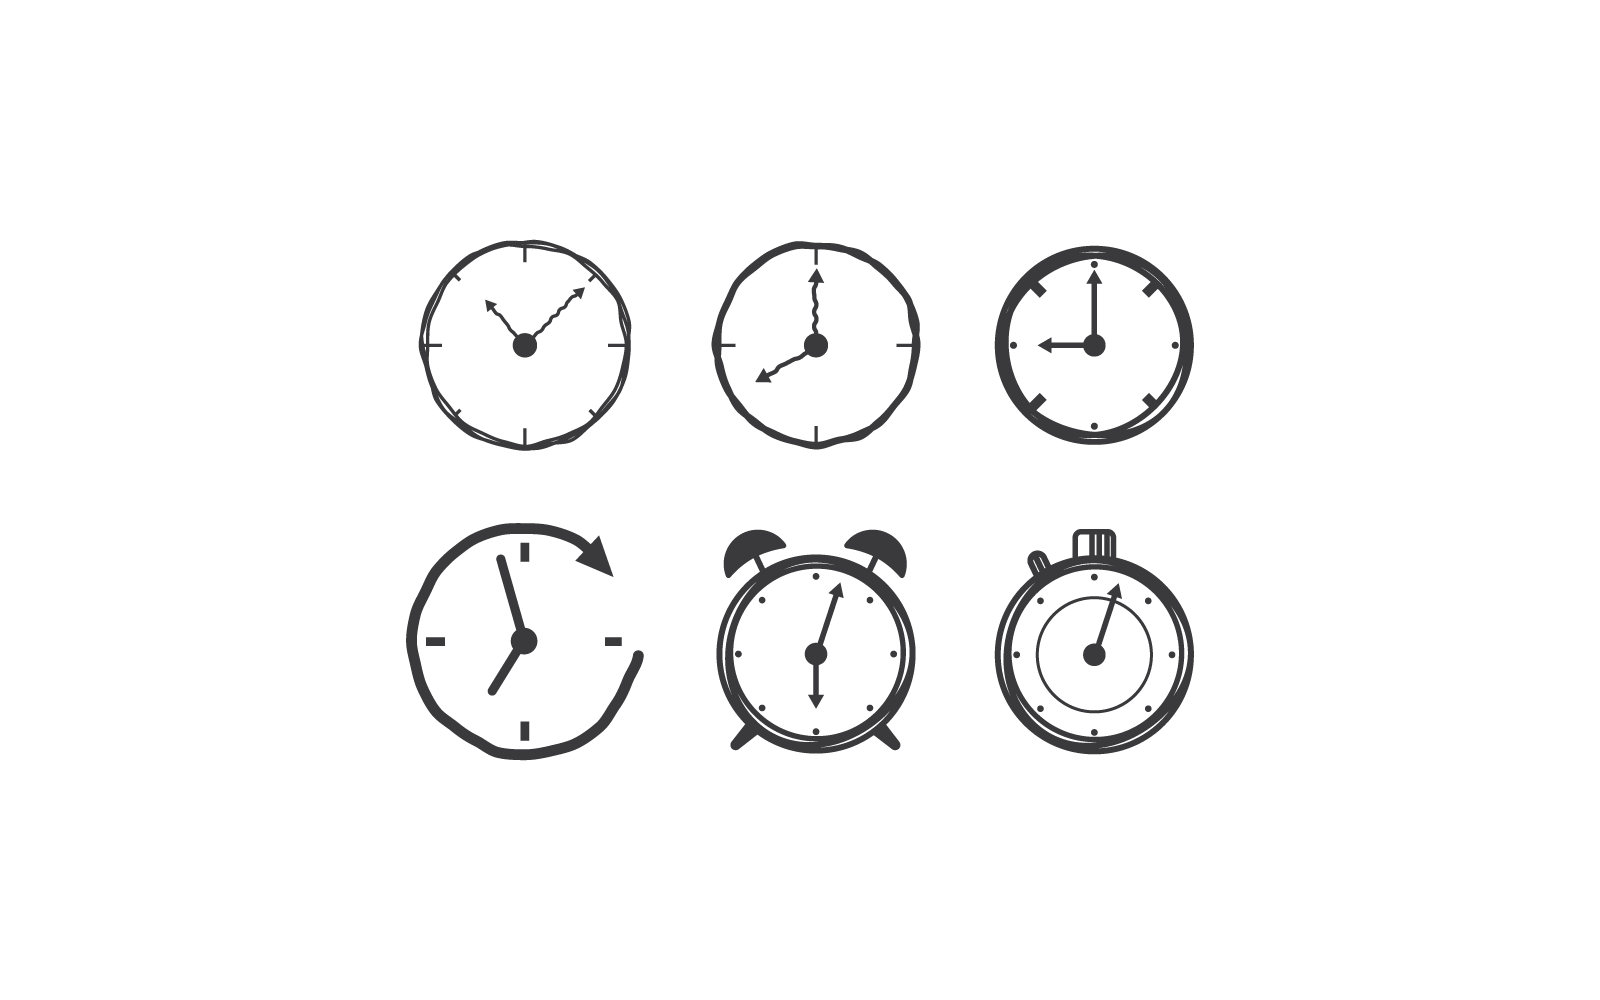 O horloge illustration vecteur design plat